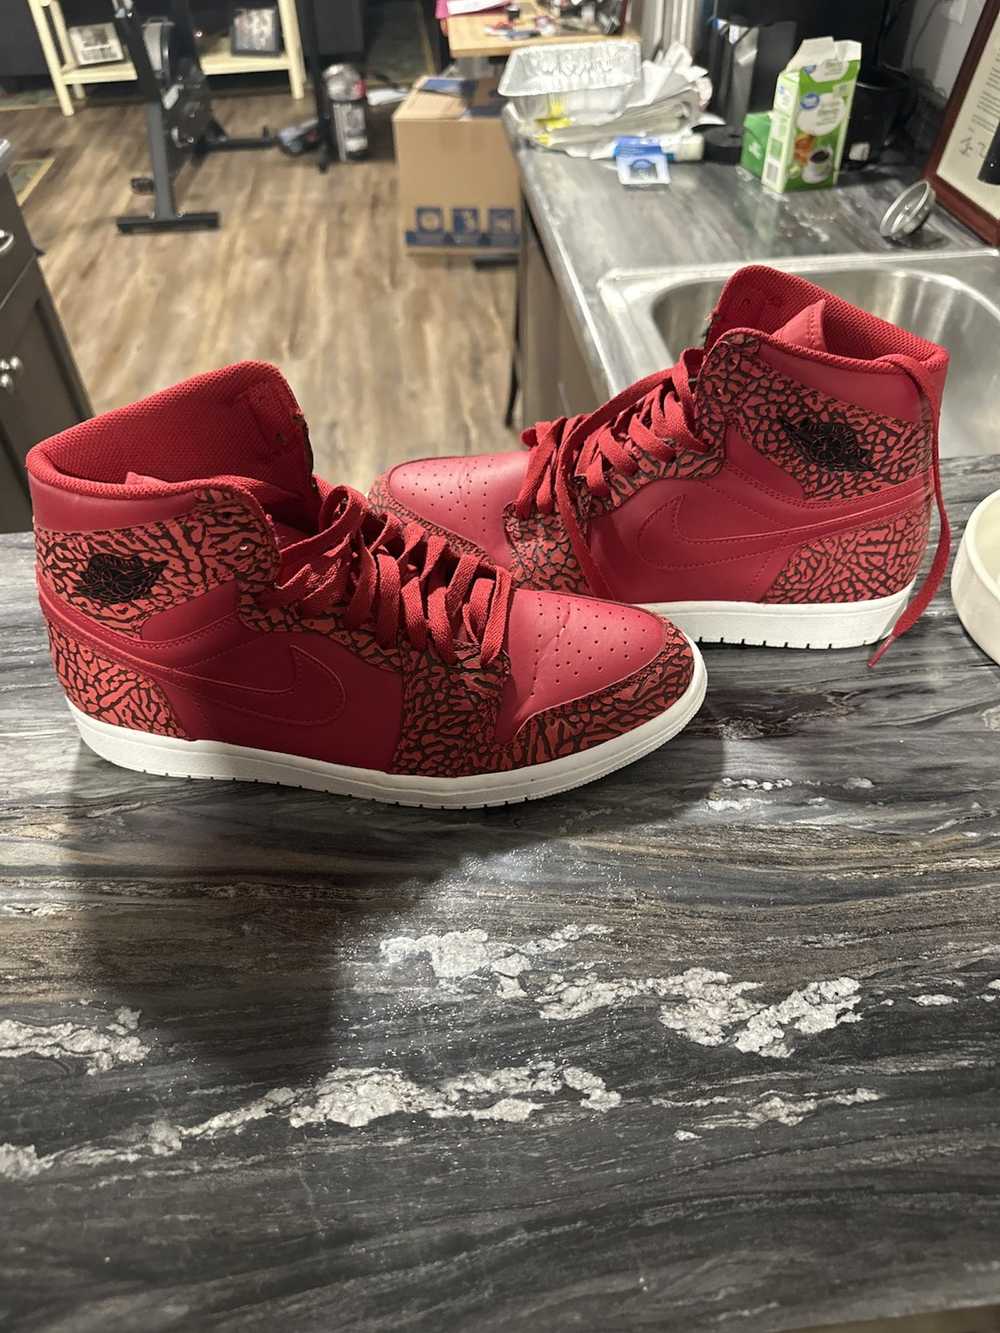 Jordan Brand × Nike Jordan 1 red elephant - image 1